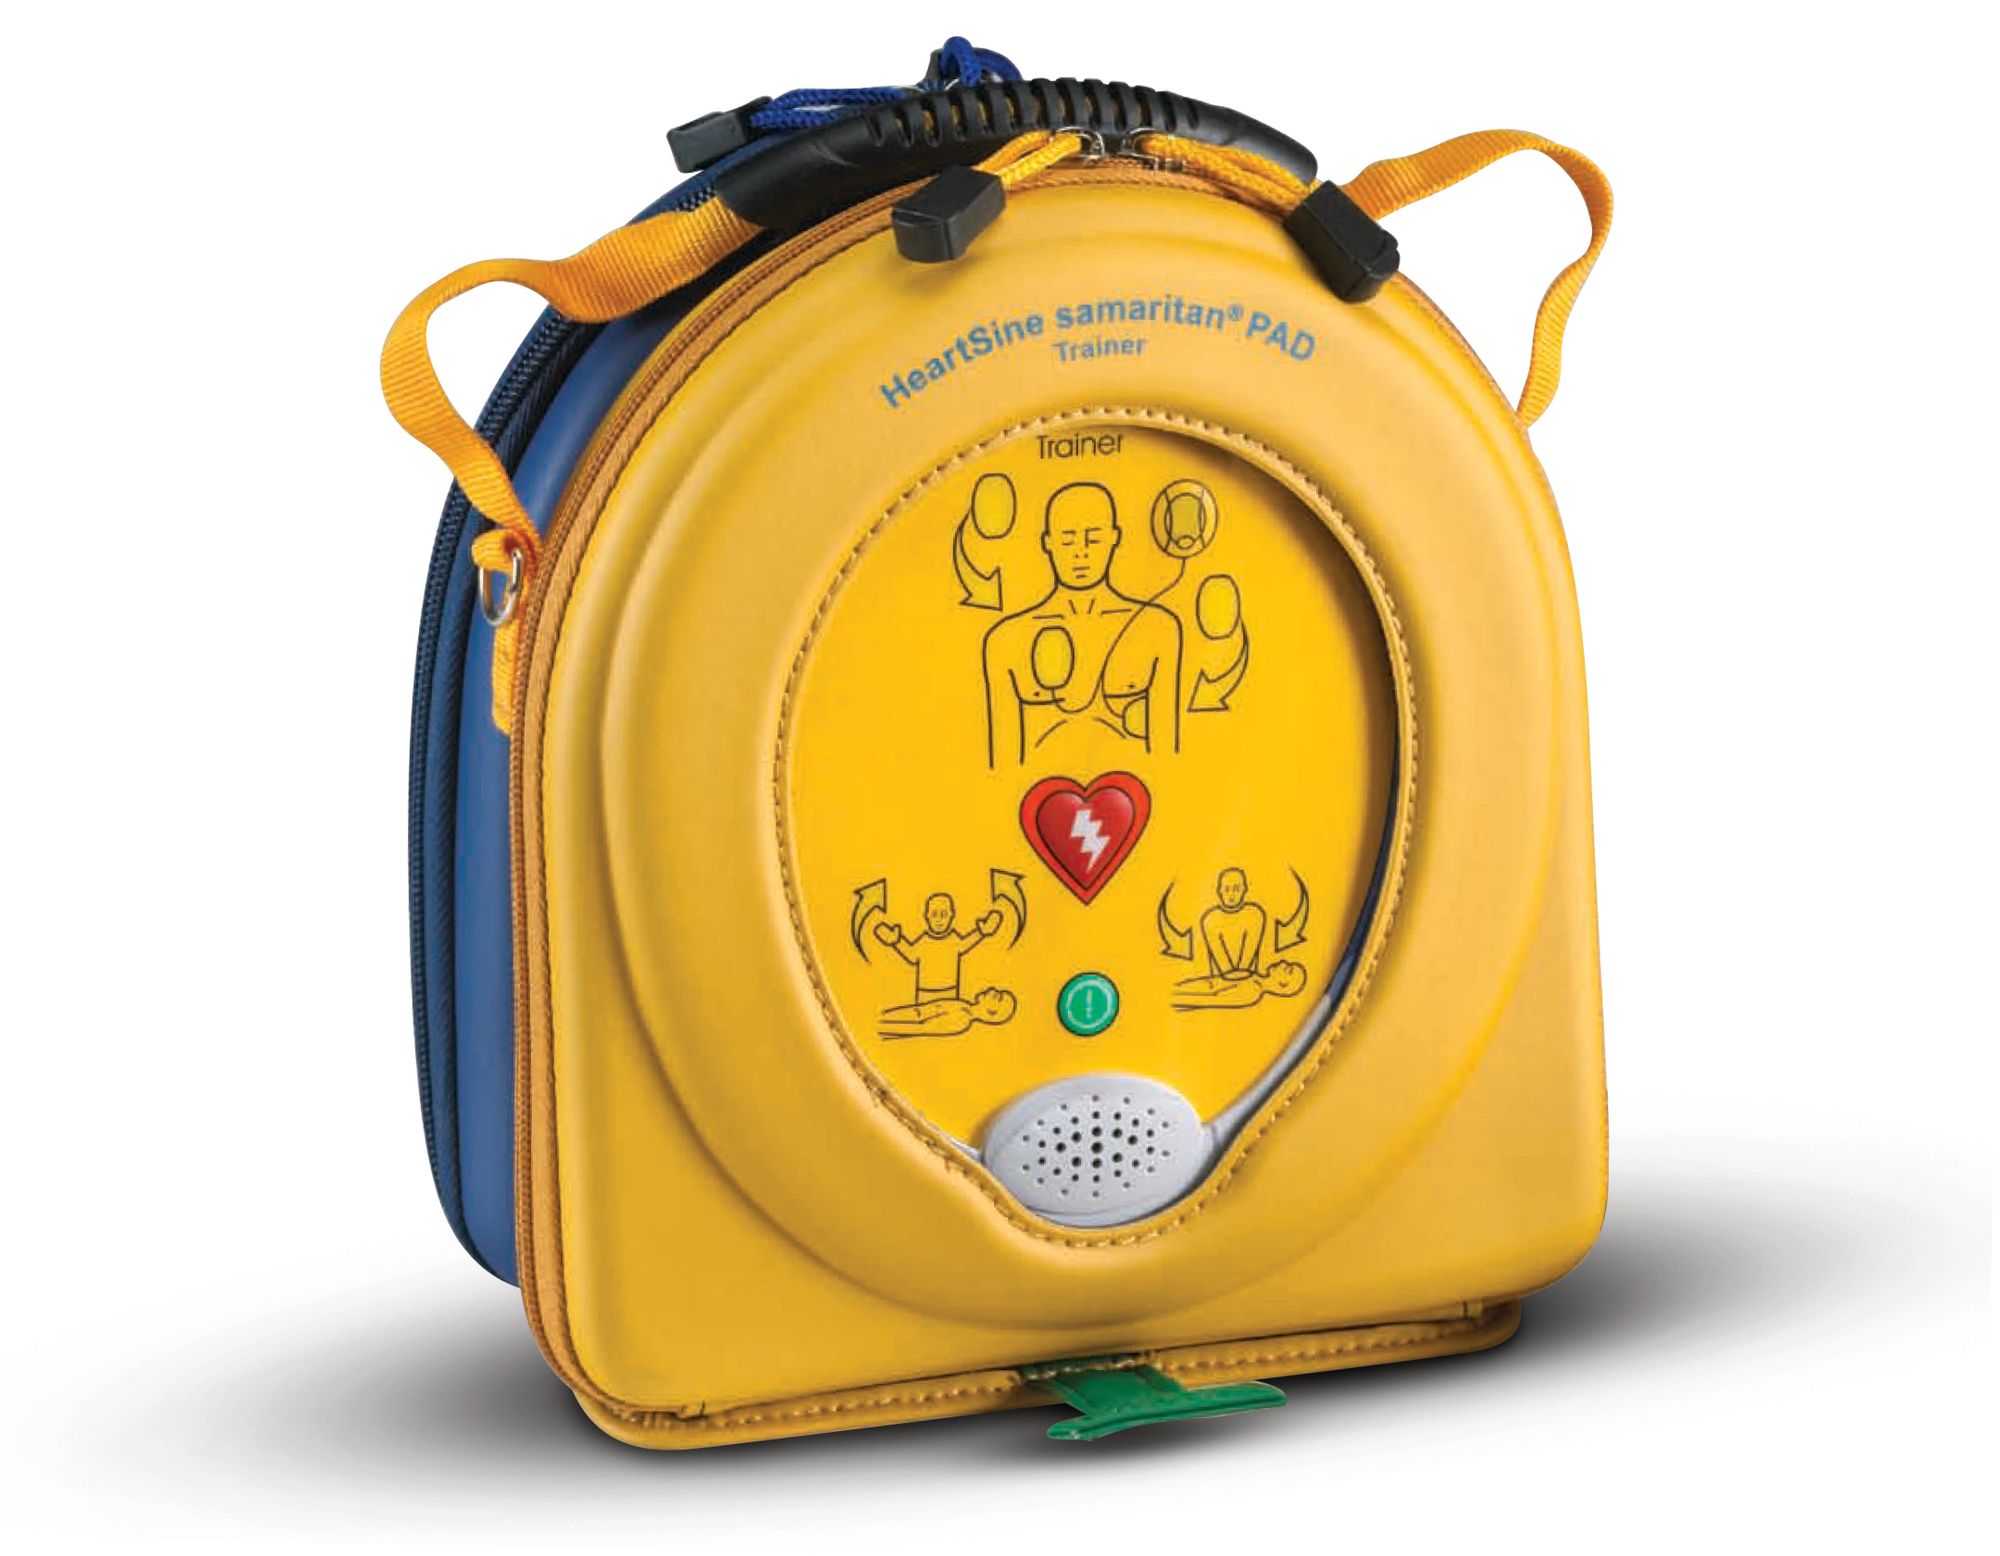  Heartsine Samaritan PAD 350P AED Trainer